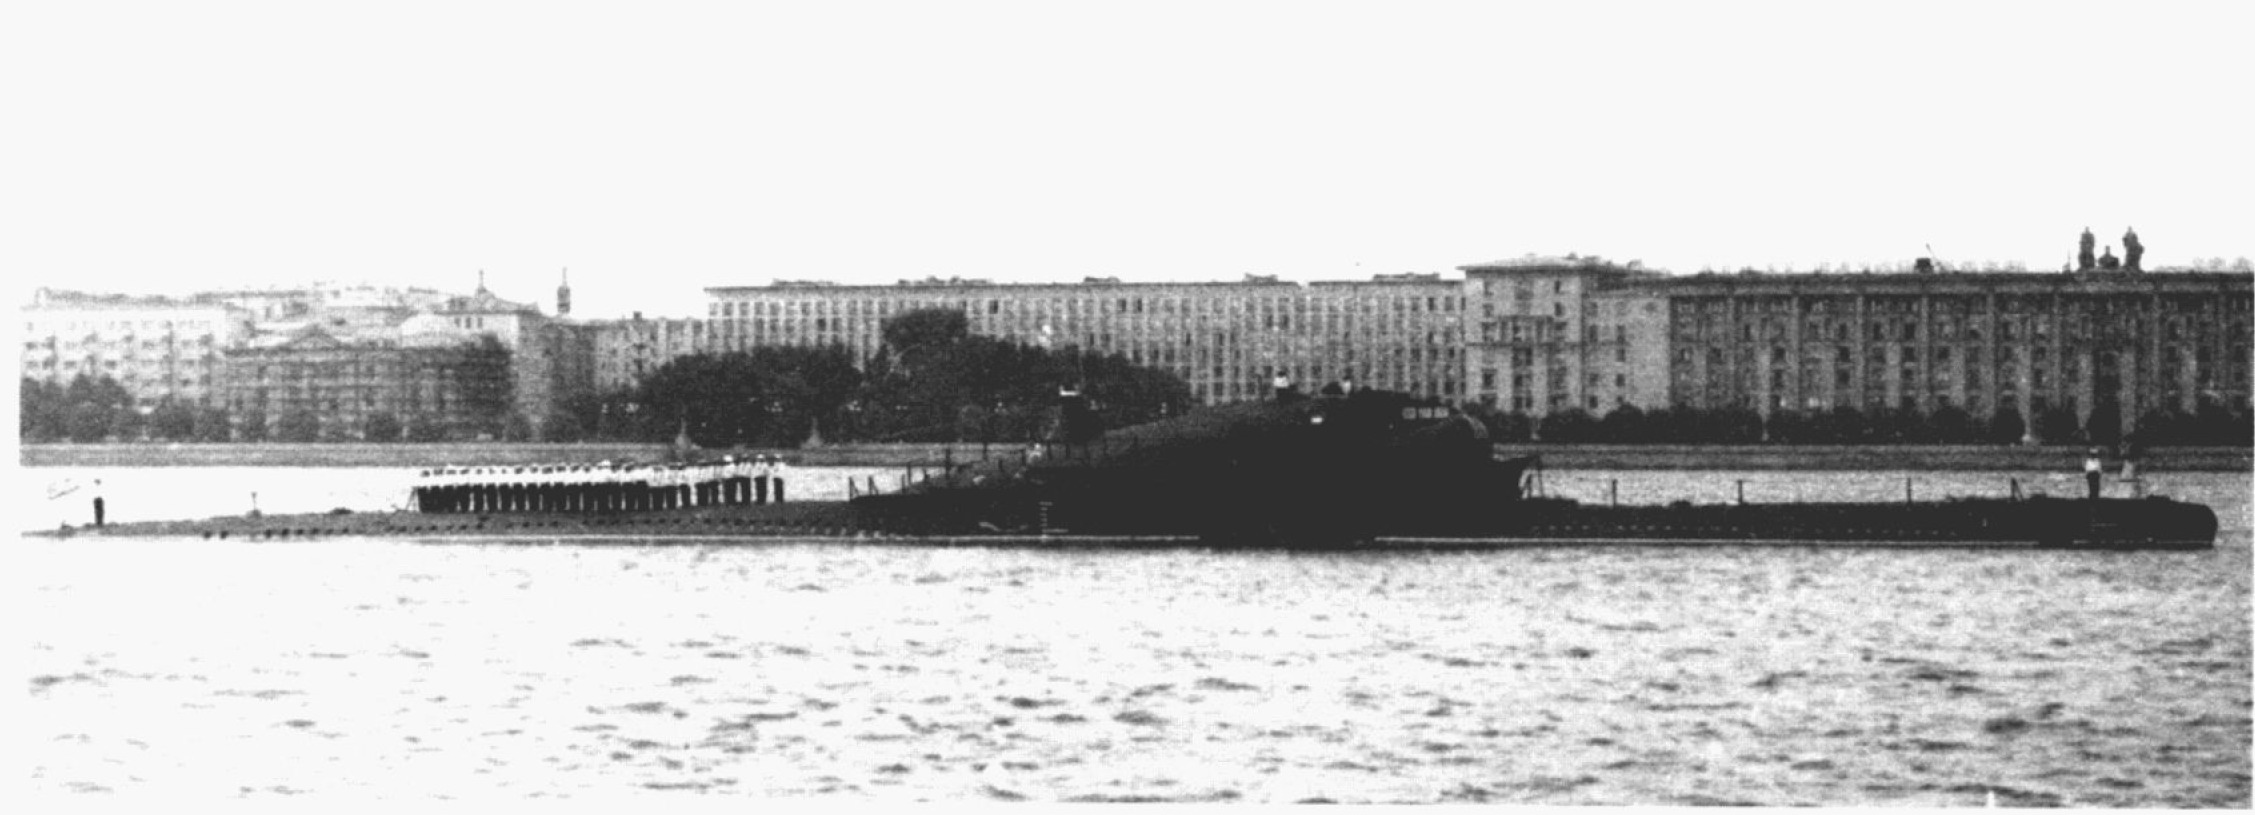 Пл пр т. Пл 651 проекта. К-142 подводная лодка. Подводная лодка пр 651. Подводная лодка Касатка пр 651.